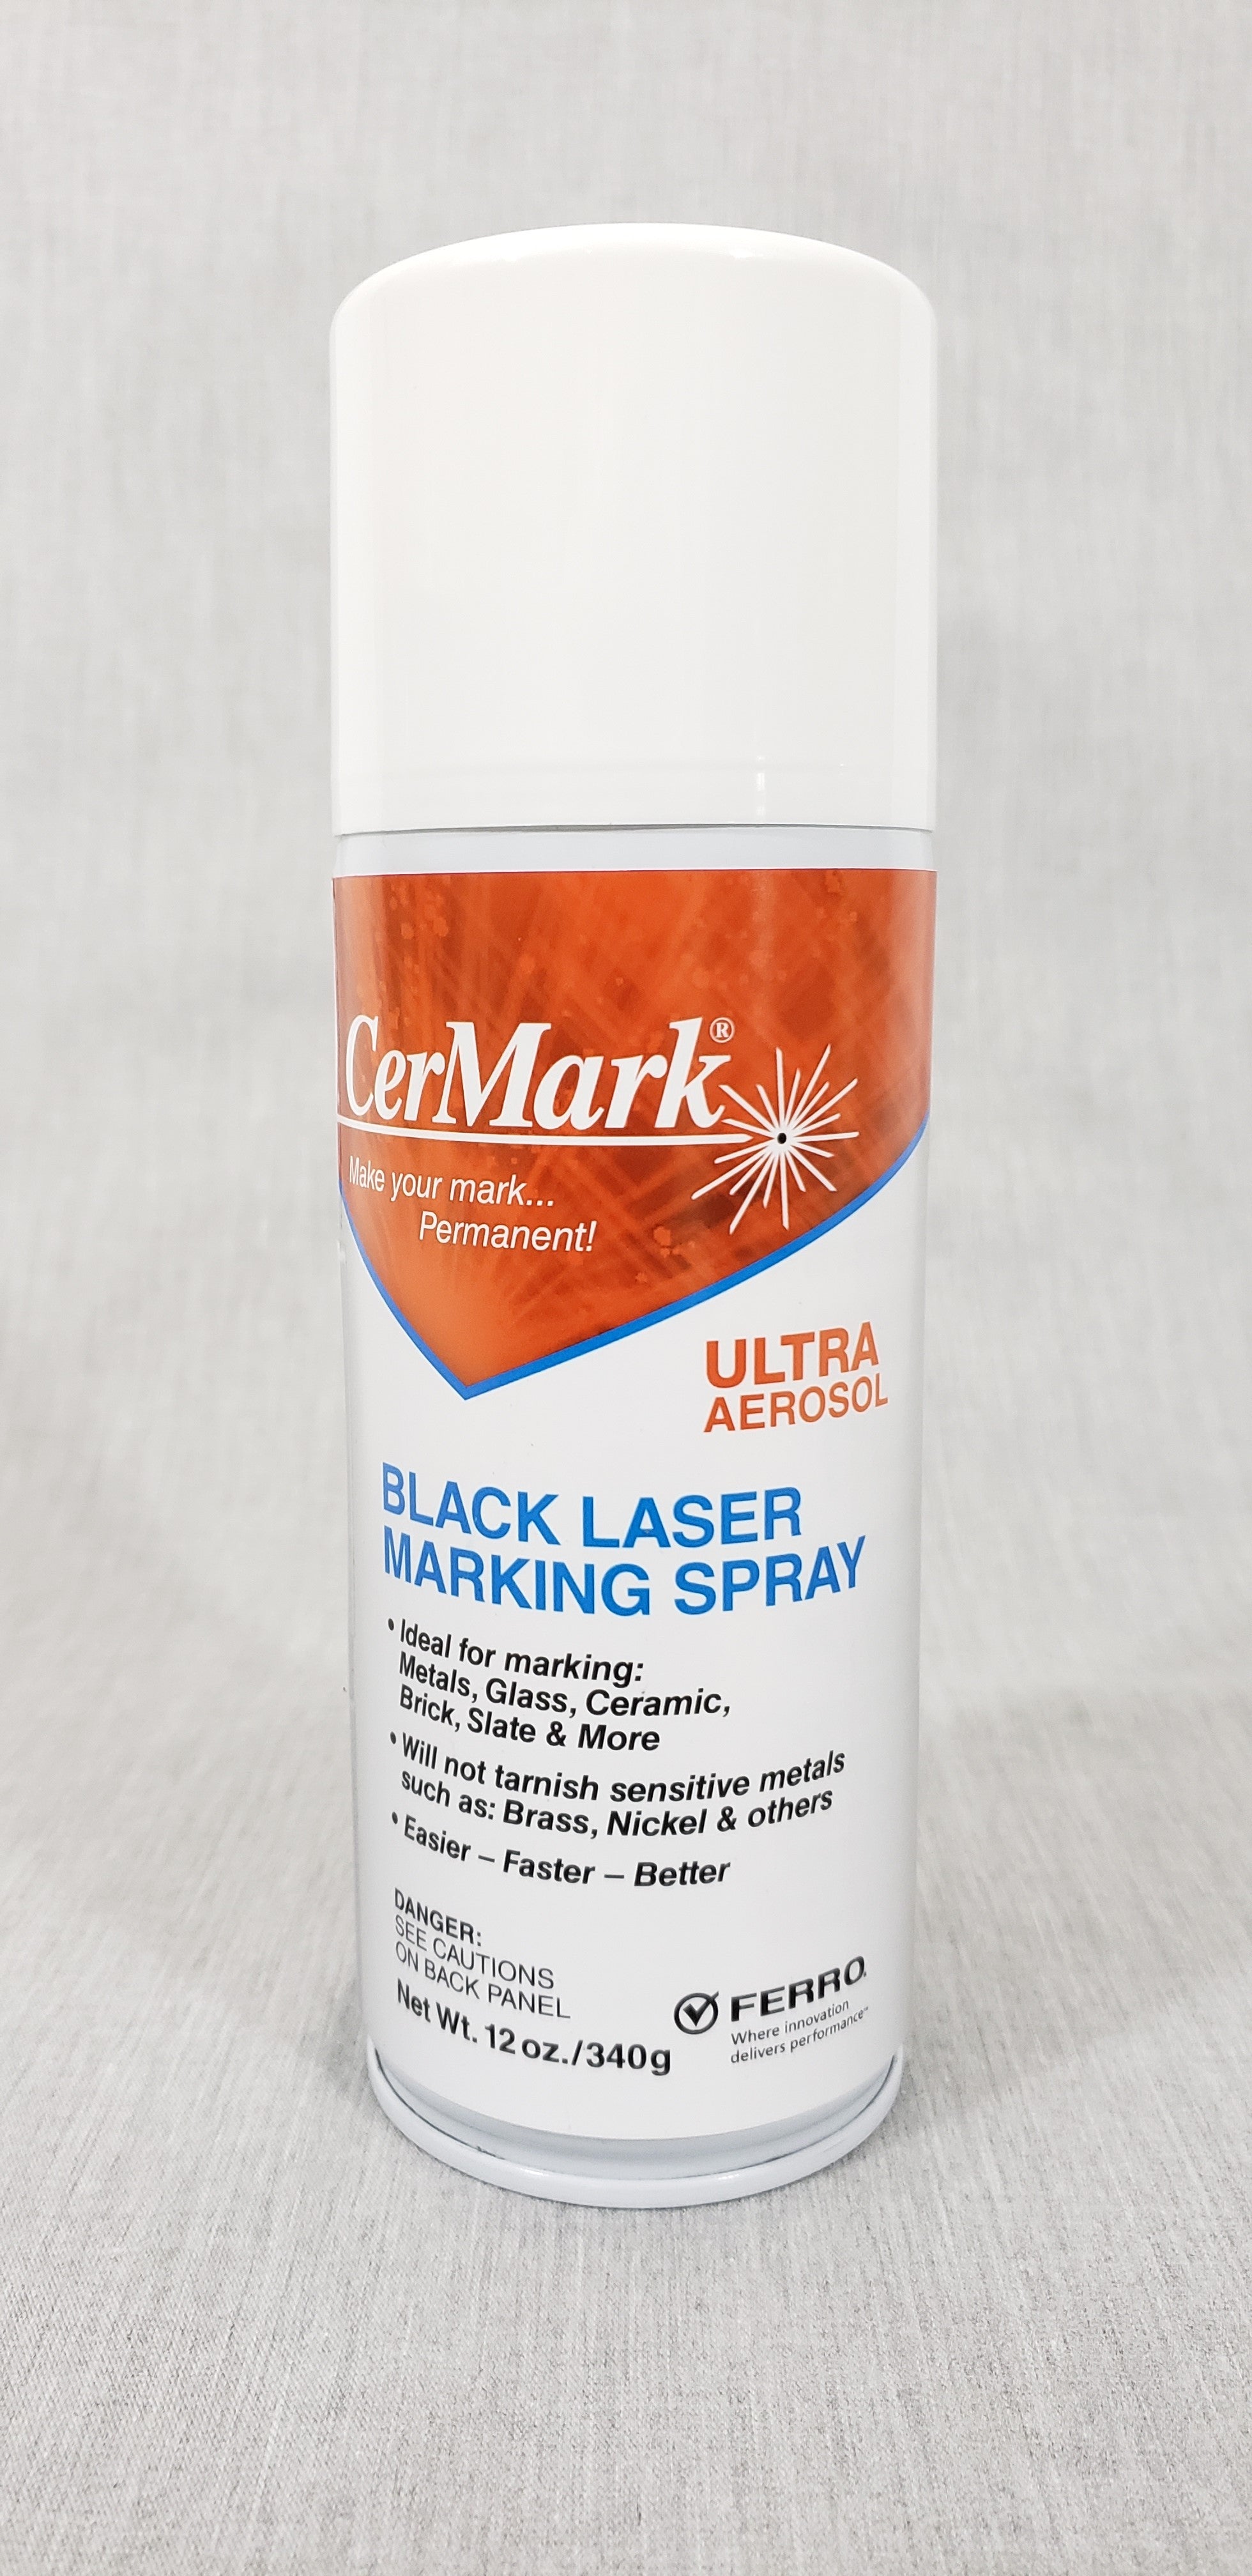 Testing the new Cermark Ultra Laser Spray, New Formula